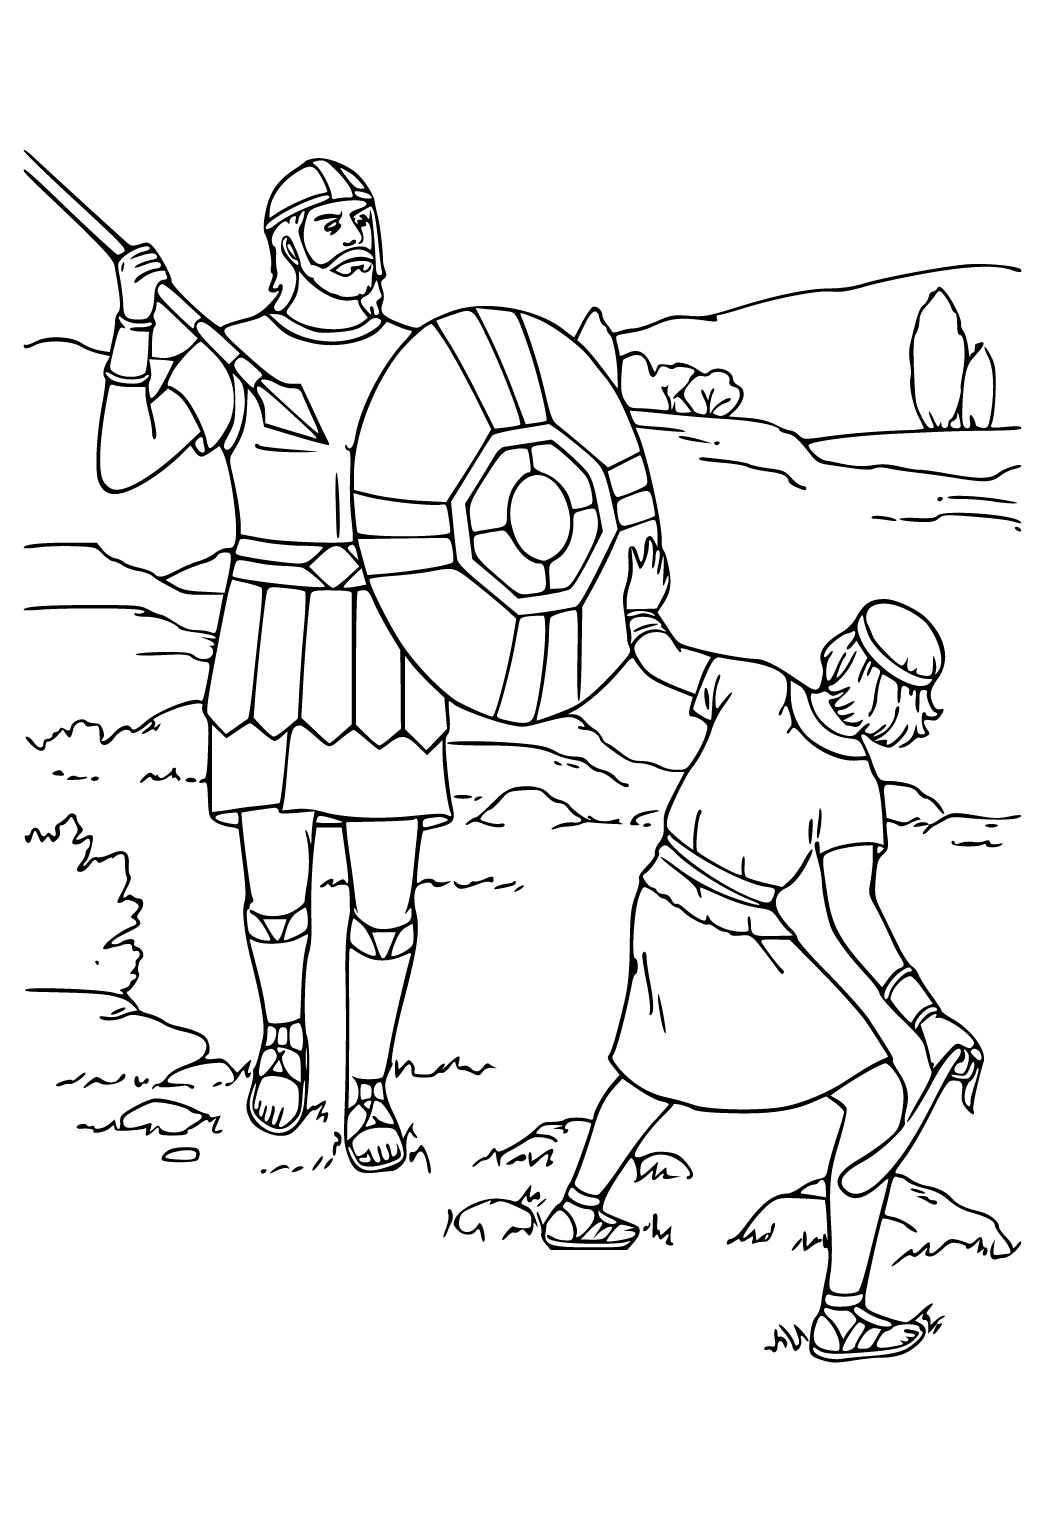 David și Goliat